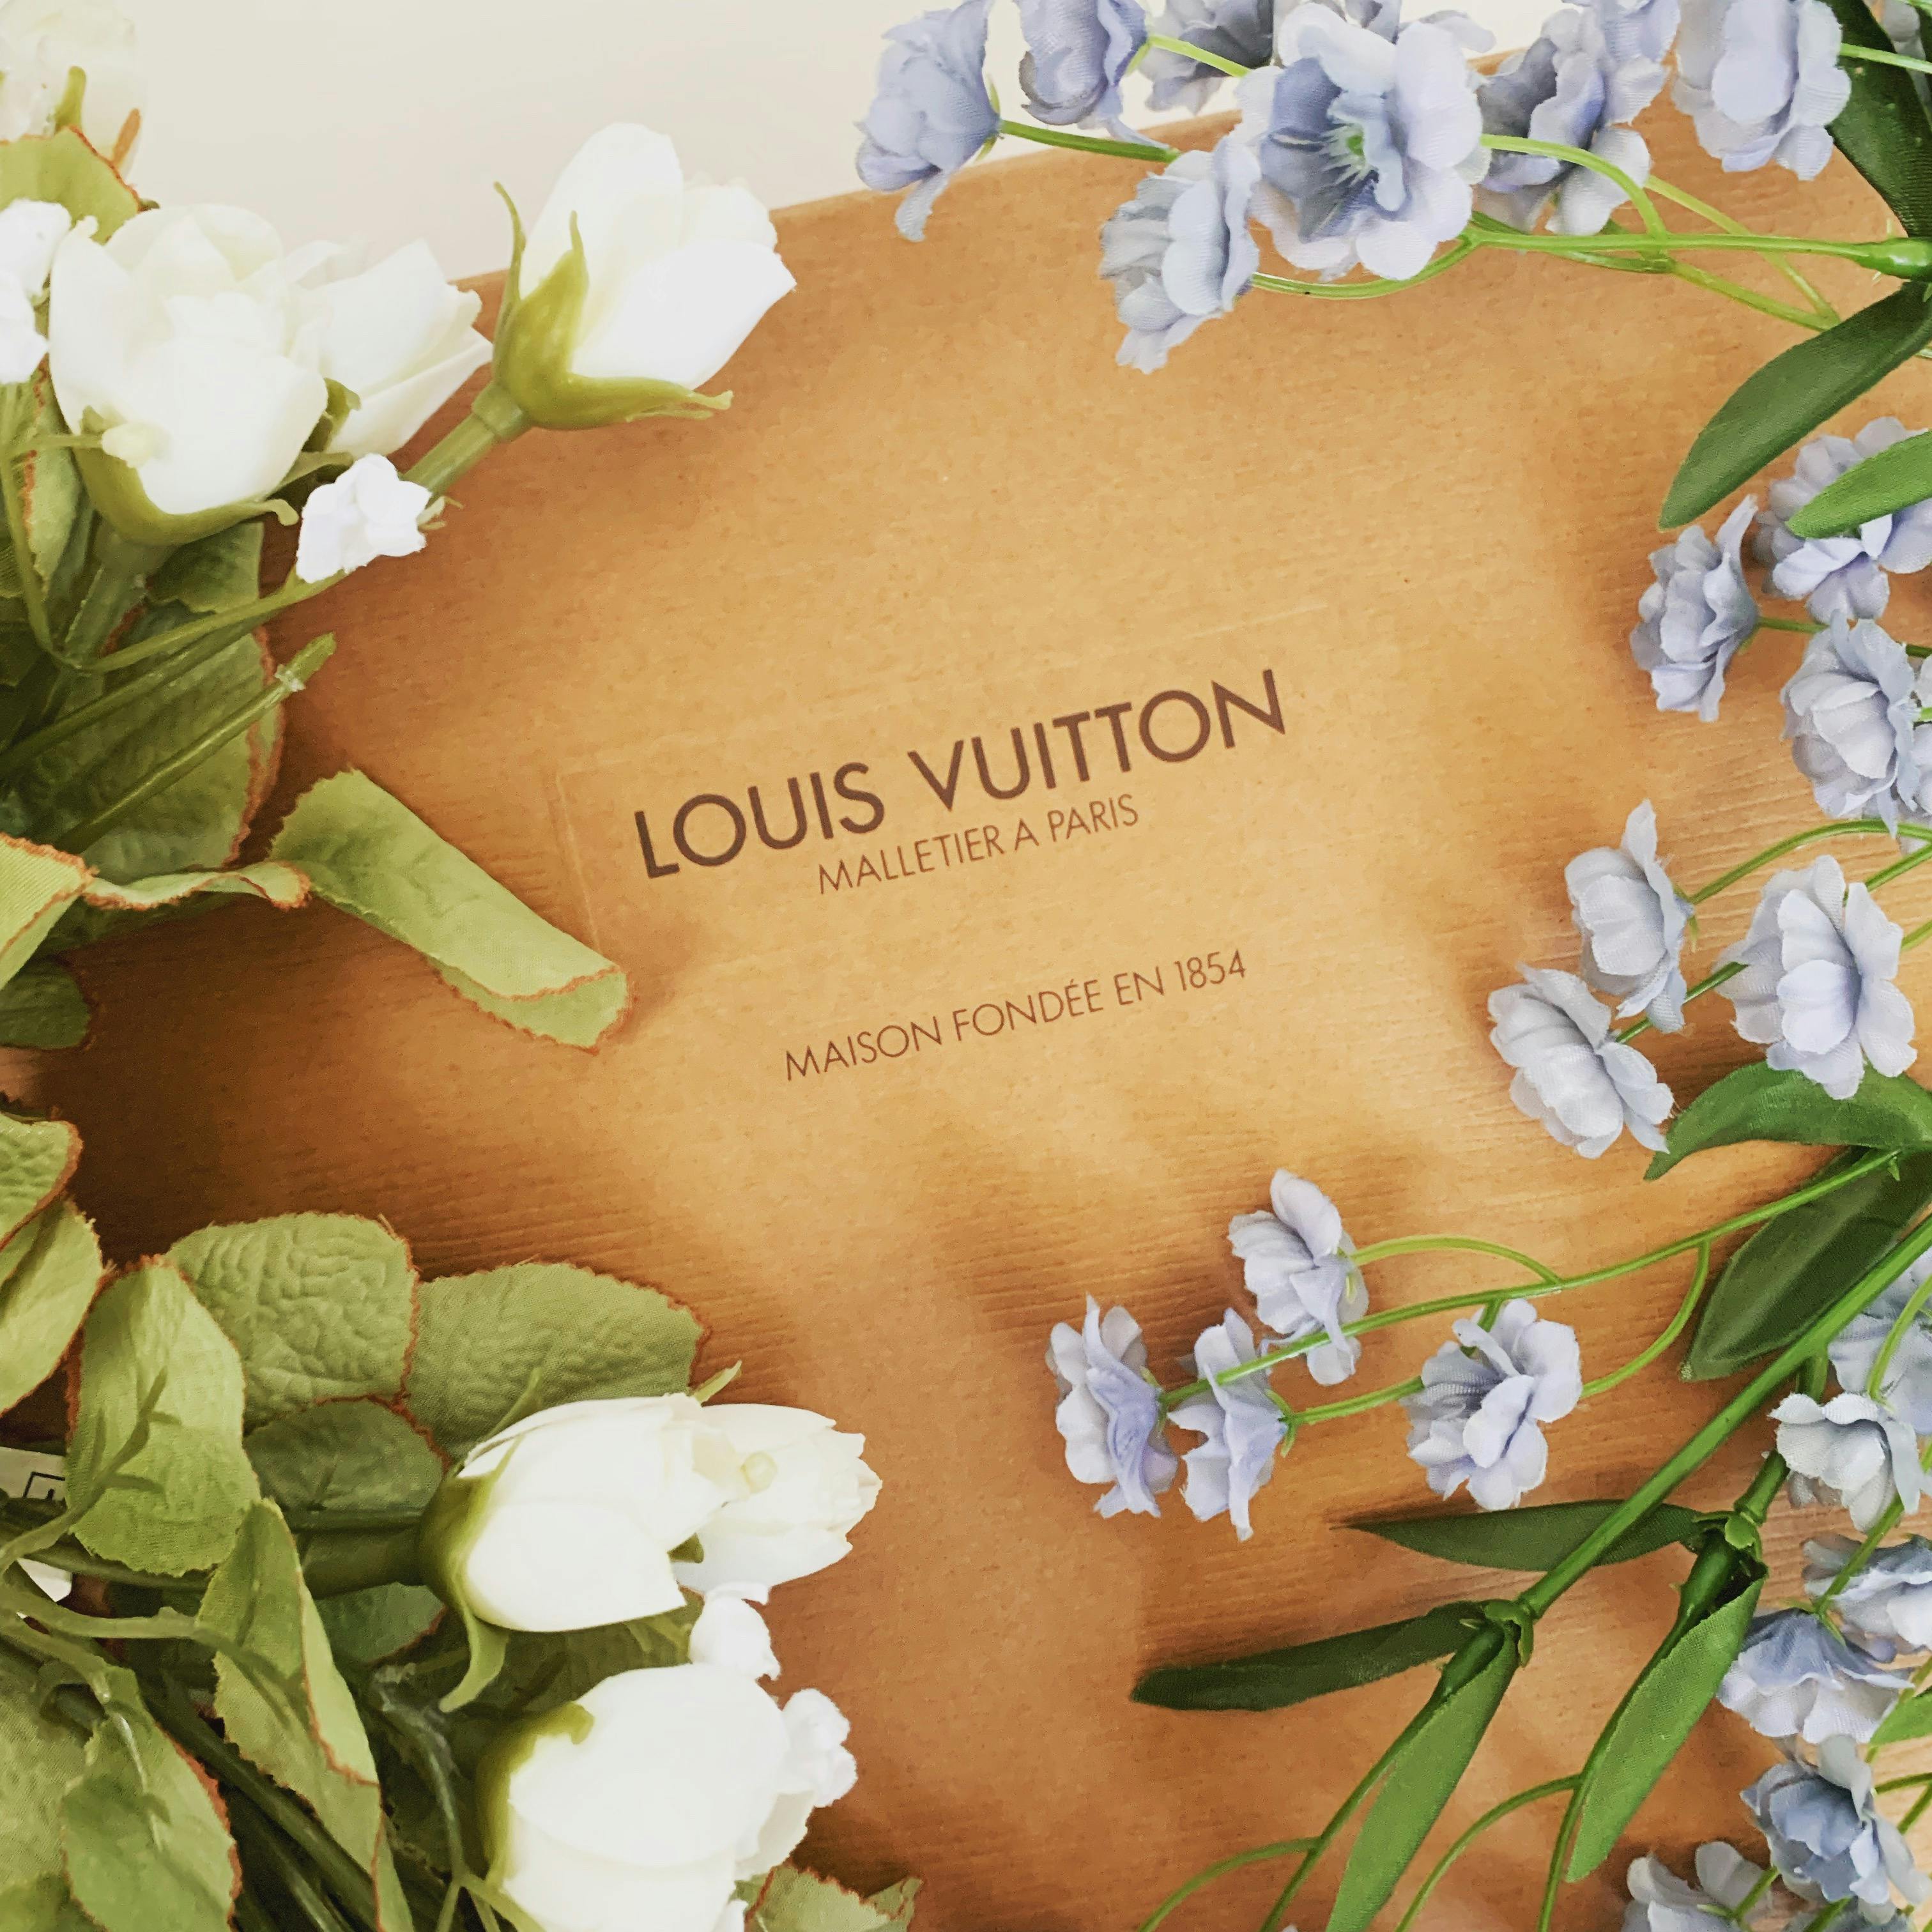 Louis Vuitton Photos, Download The BEST Free Louis Vuitton Stock Photos &  HD Images